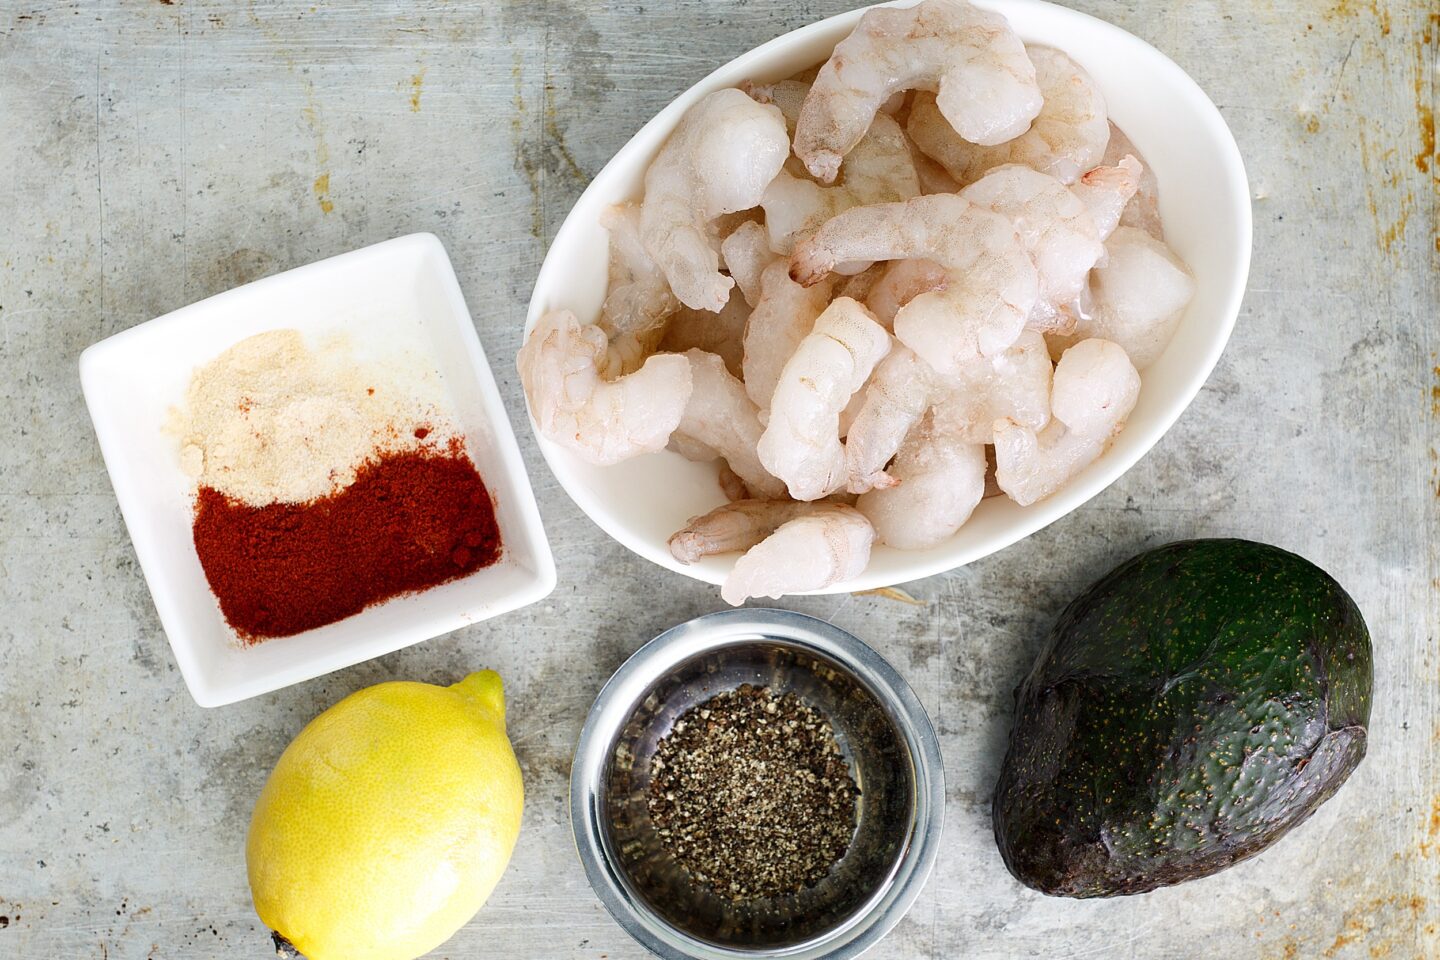 Ingredients for shrimp stuffed avocados